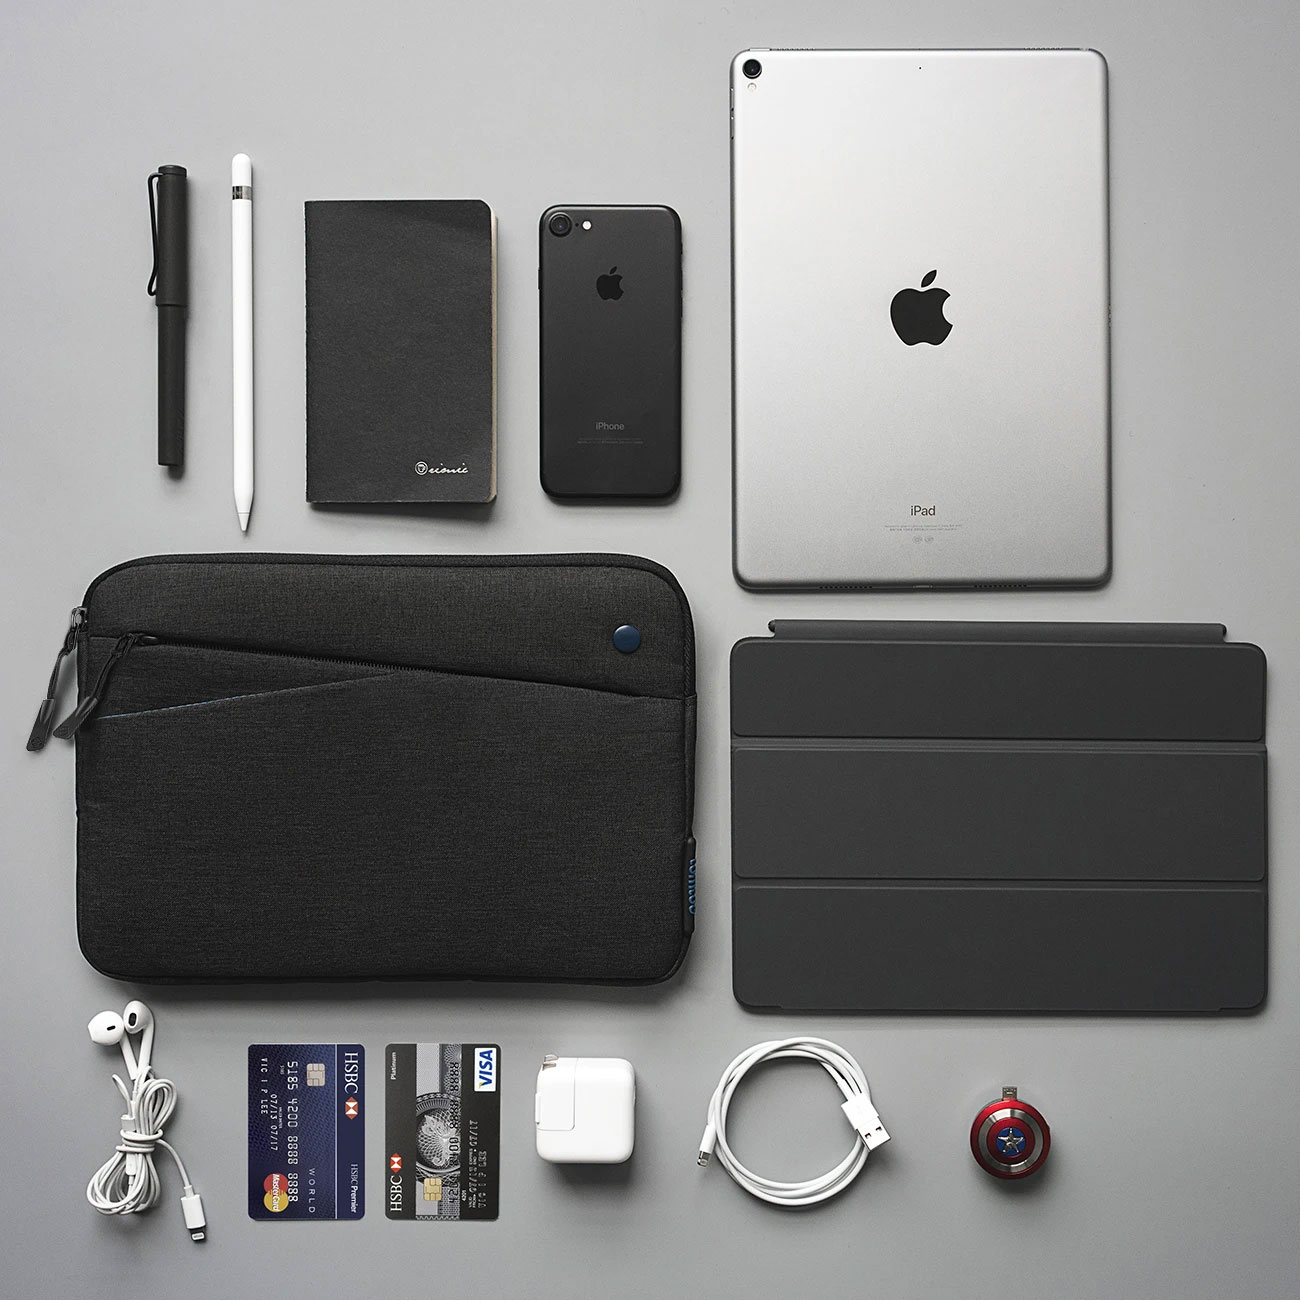 Túi Tomtoc (USA) Style Macbook Air/Retina 13” - Black (A18-C01D)